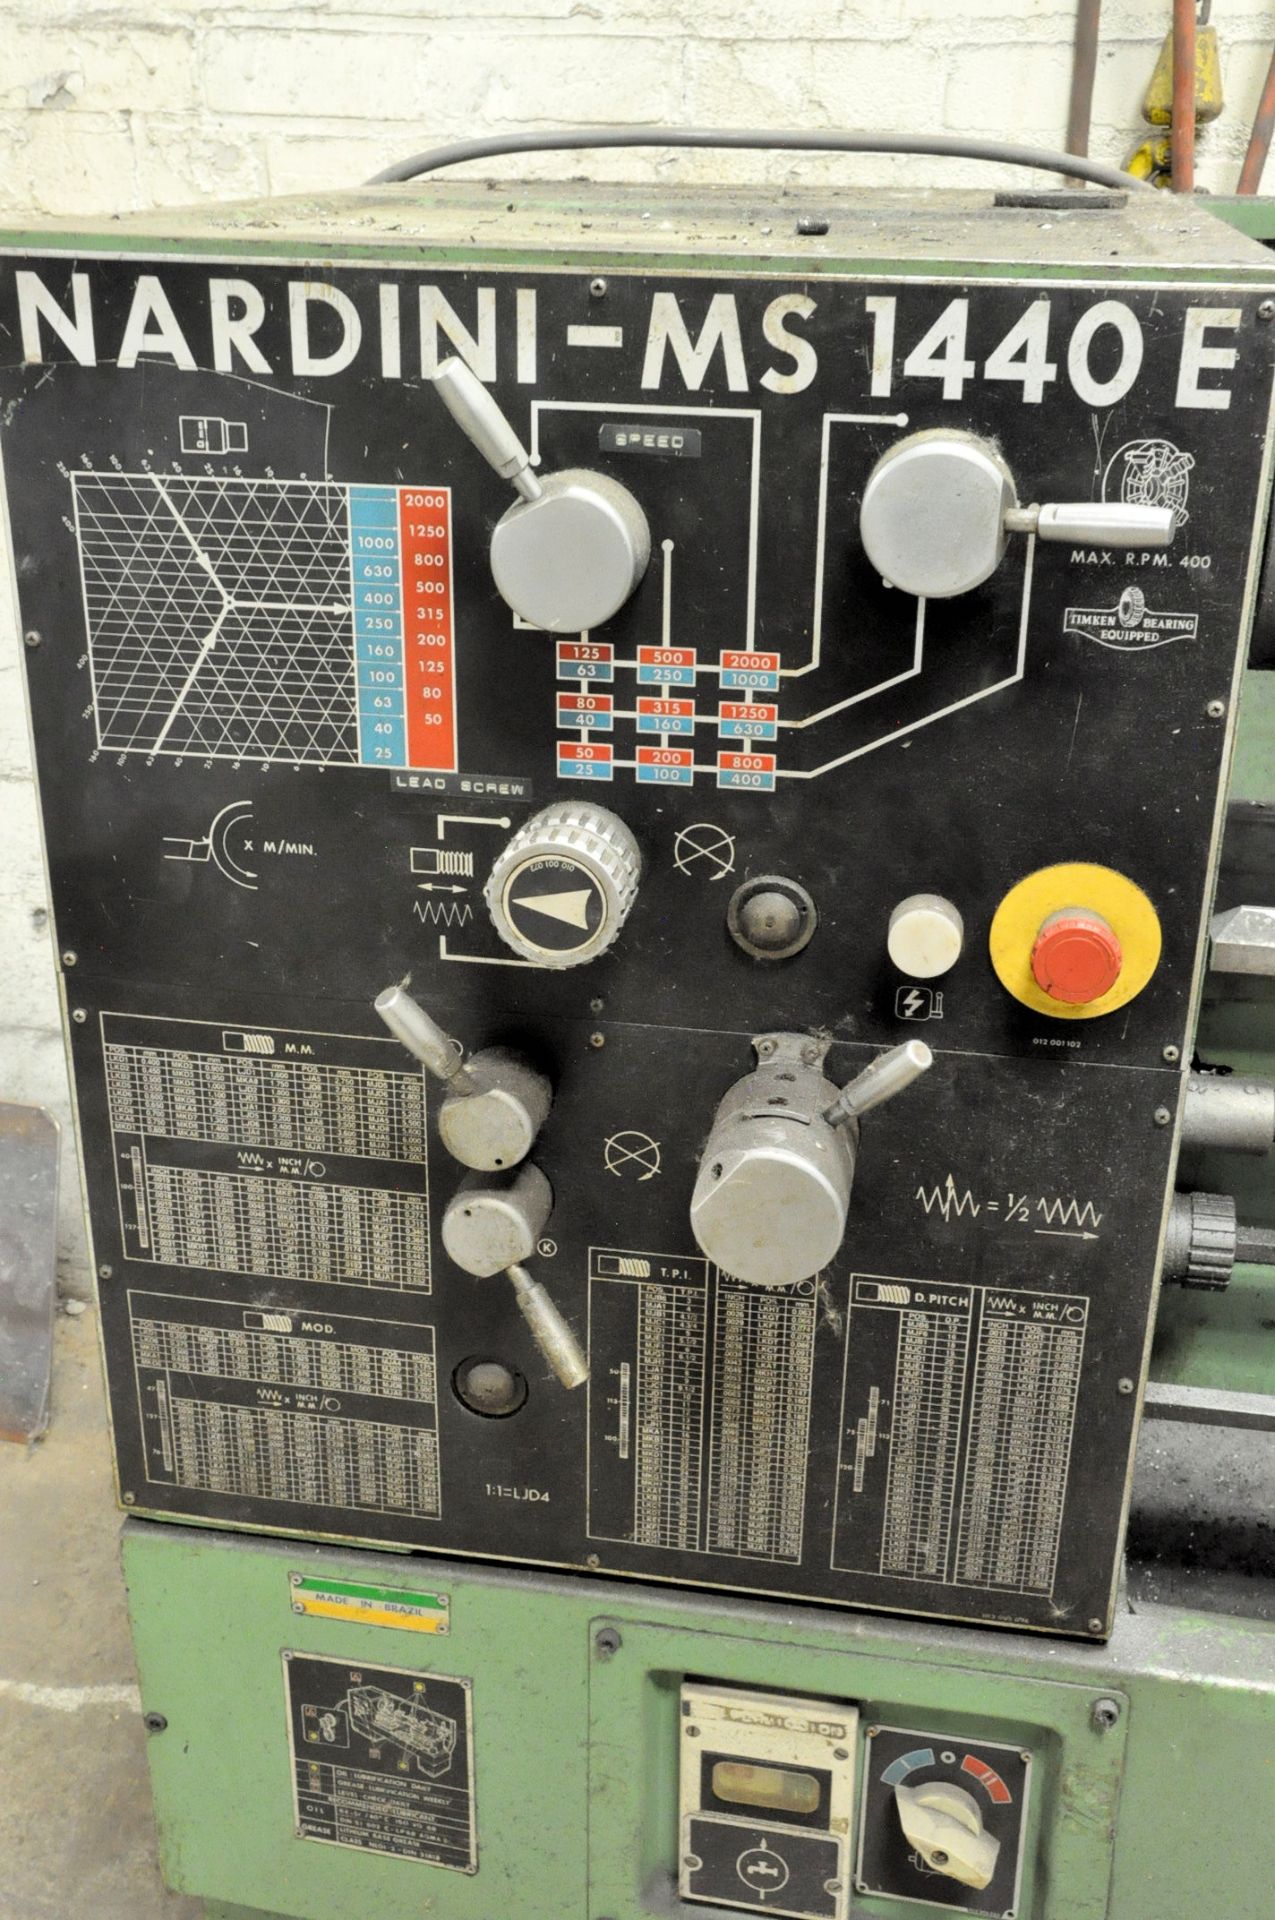 Nardini 14" x 40" Geared Head Lathe, 8" 3-Jaw Chuck, Aloris Tool Post, Tool Holders, Tail Stock - Image 5 of 5